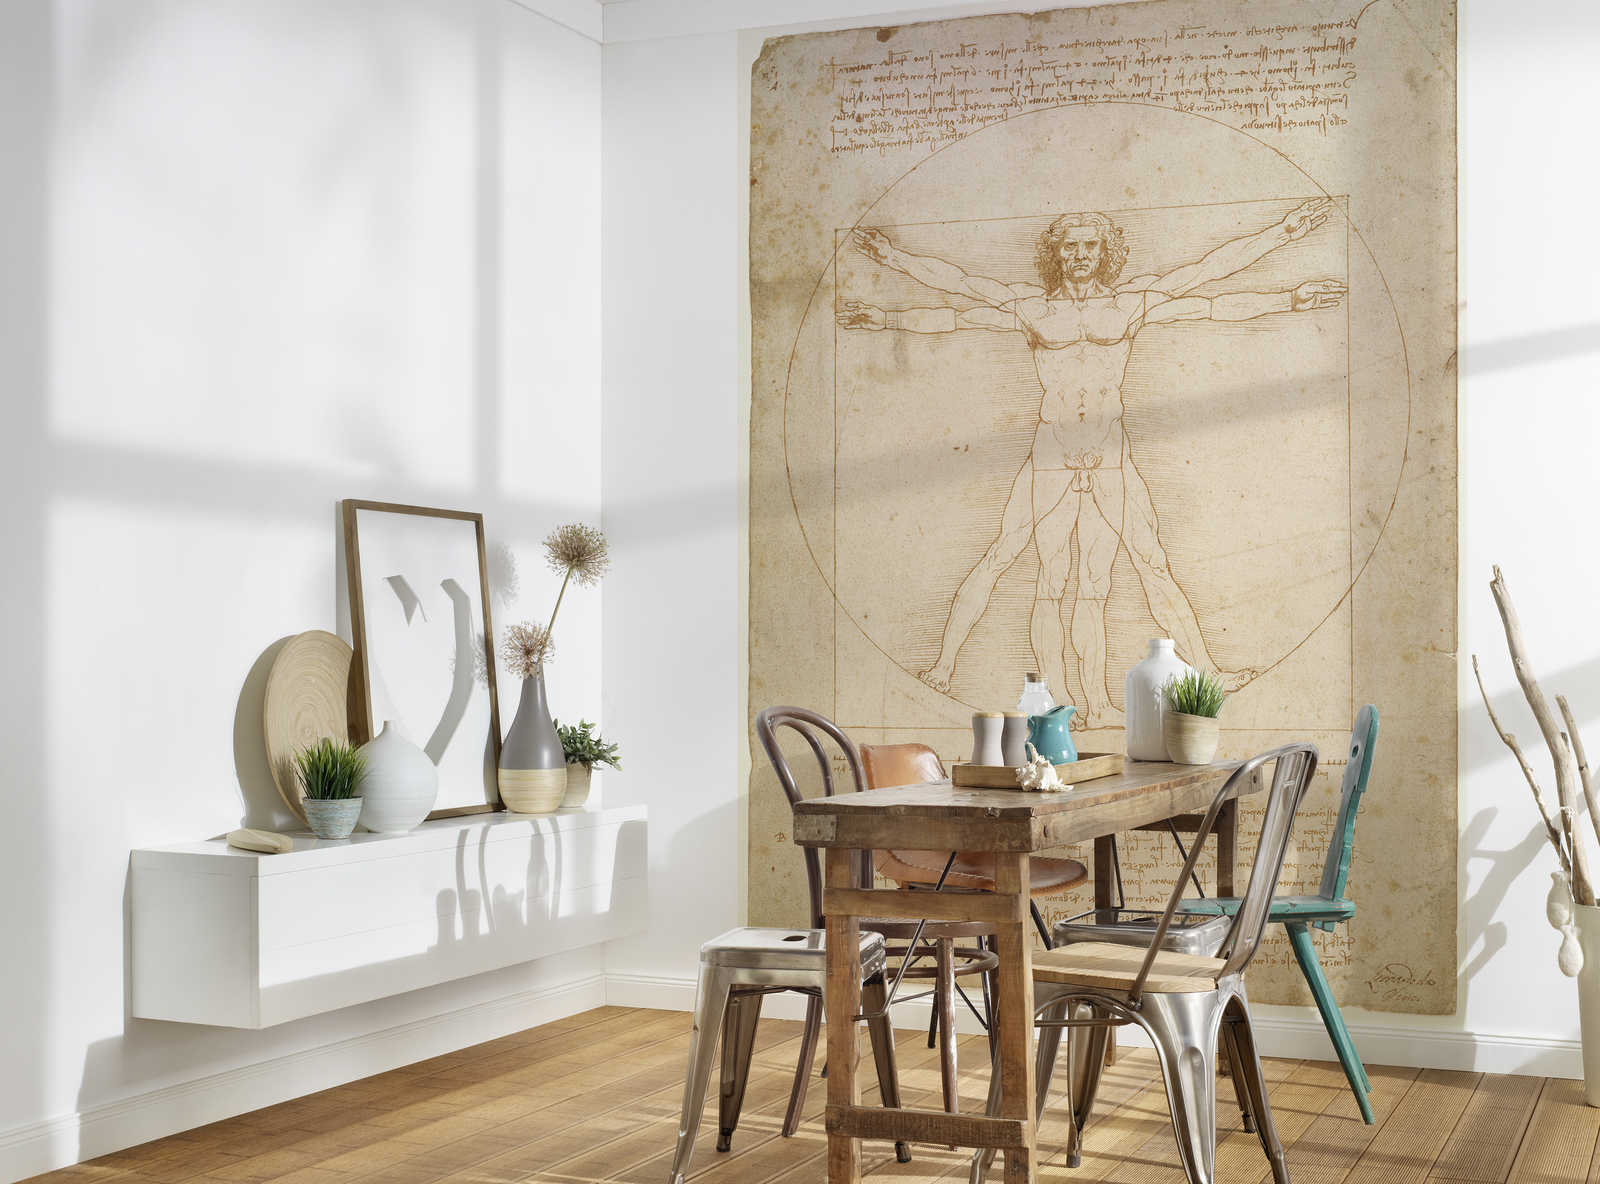             Photo wallpaper "The Vitruvian Man" by Leonardo da Vinci
        